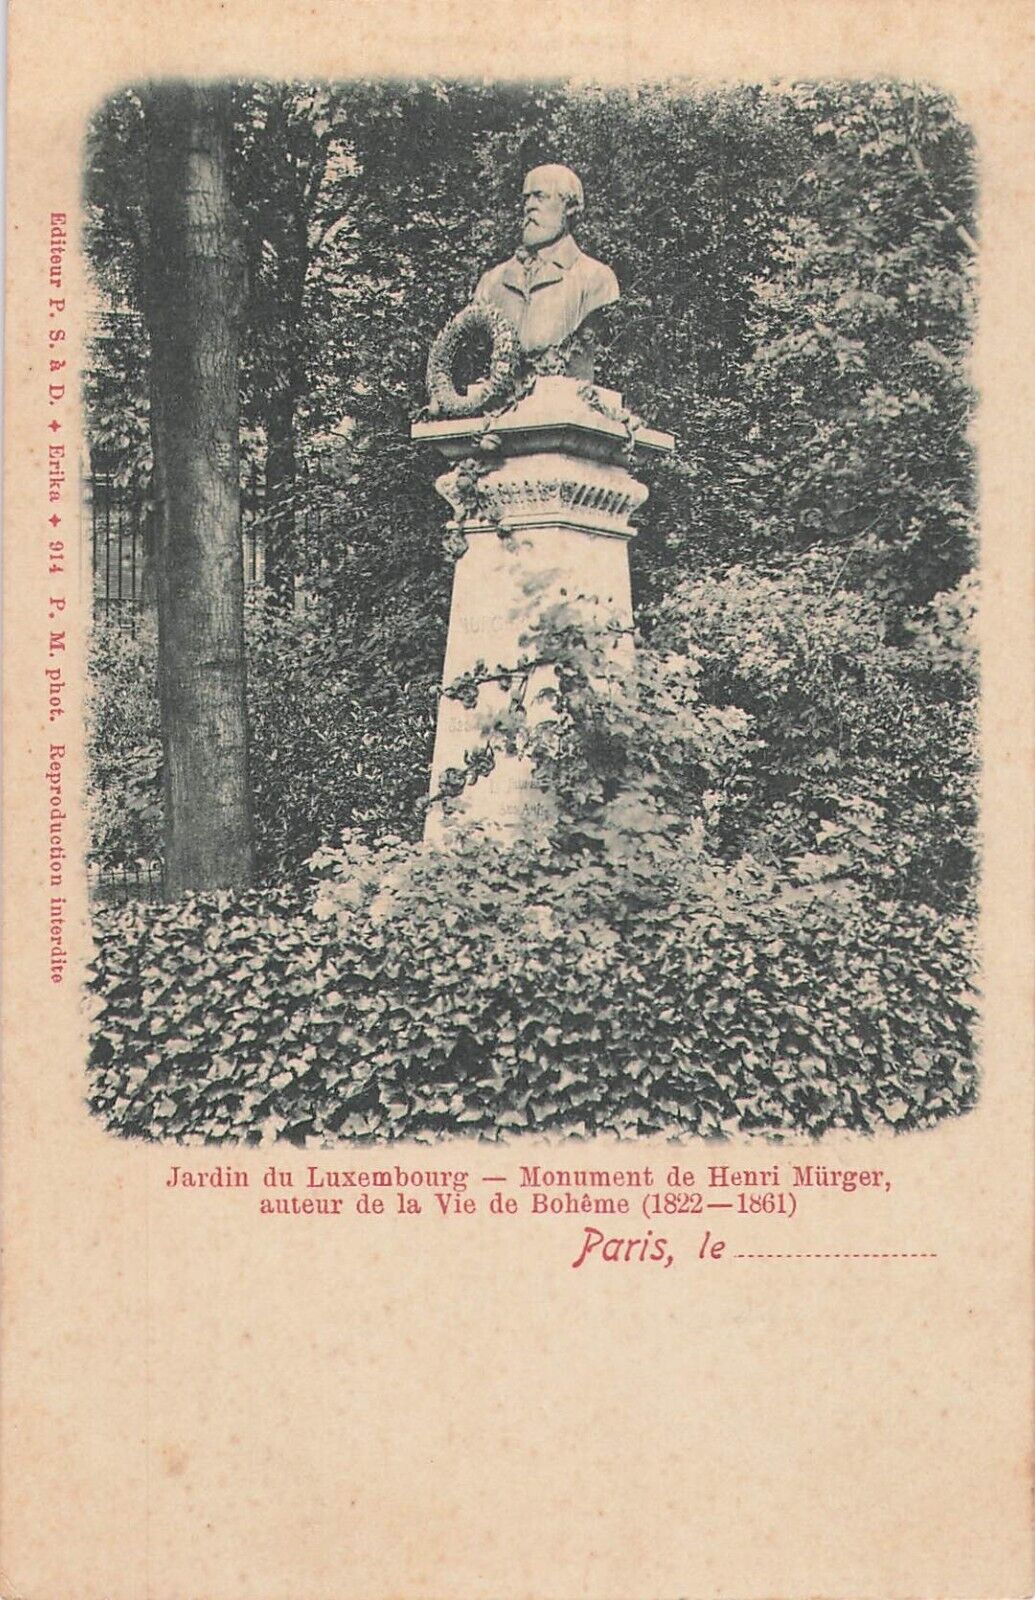 75 PARIS LUXEMBOURG GARDEN MONUMENT HENRI MURGER